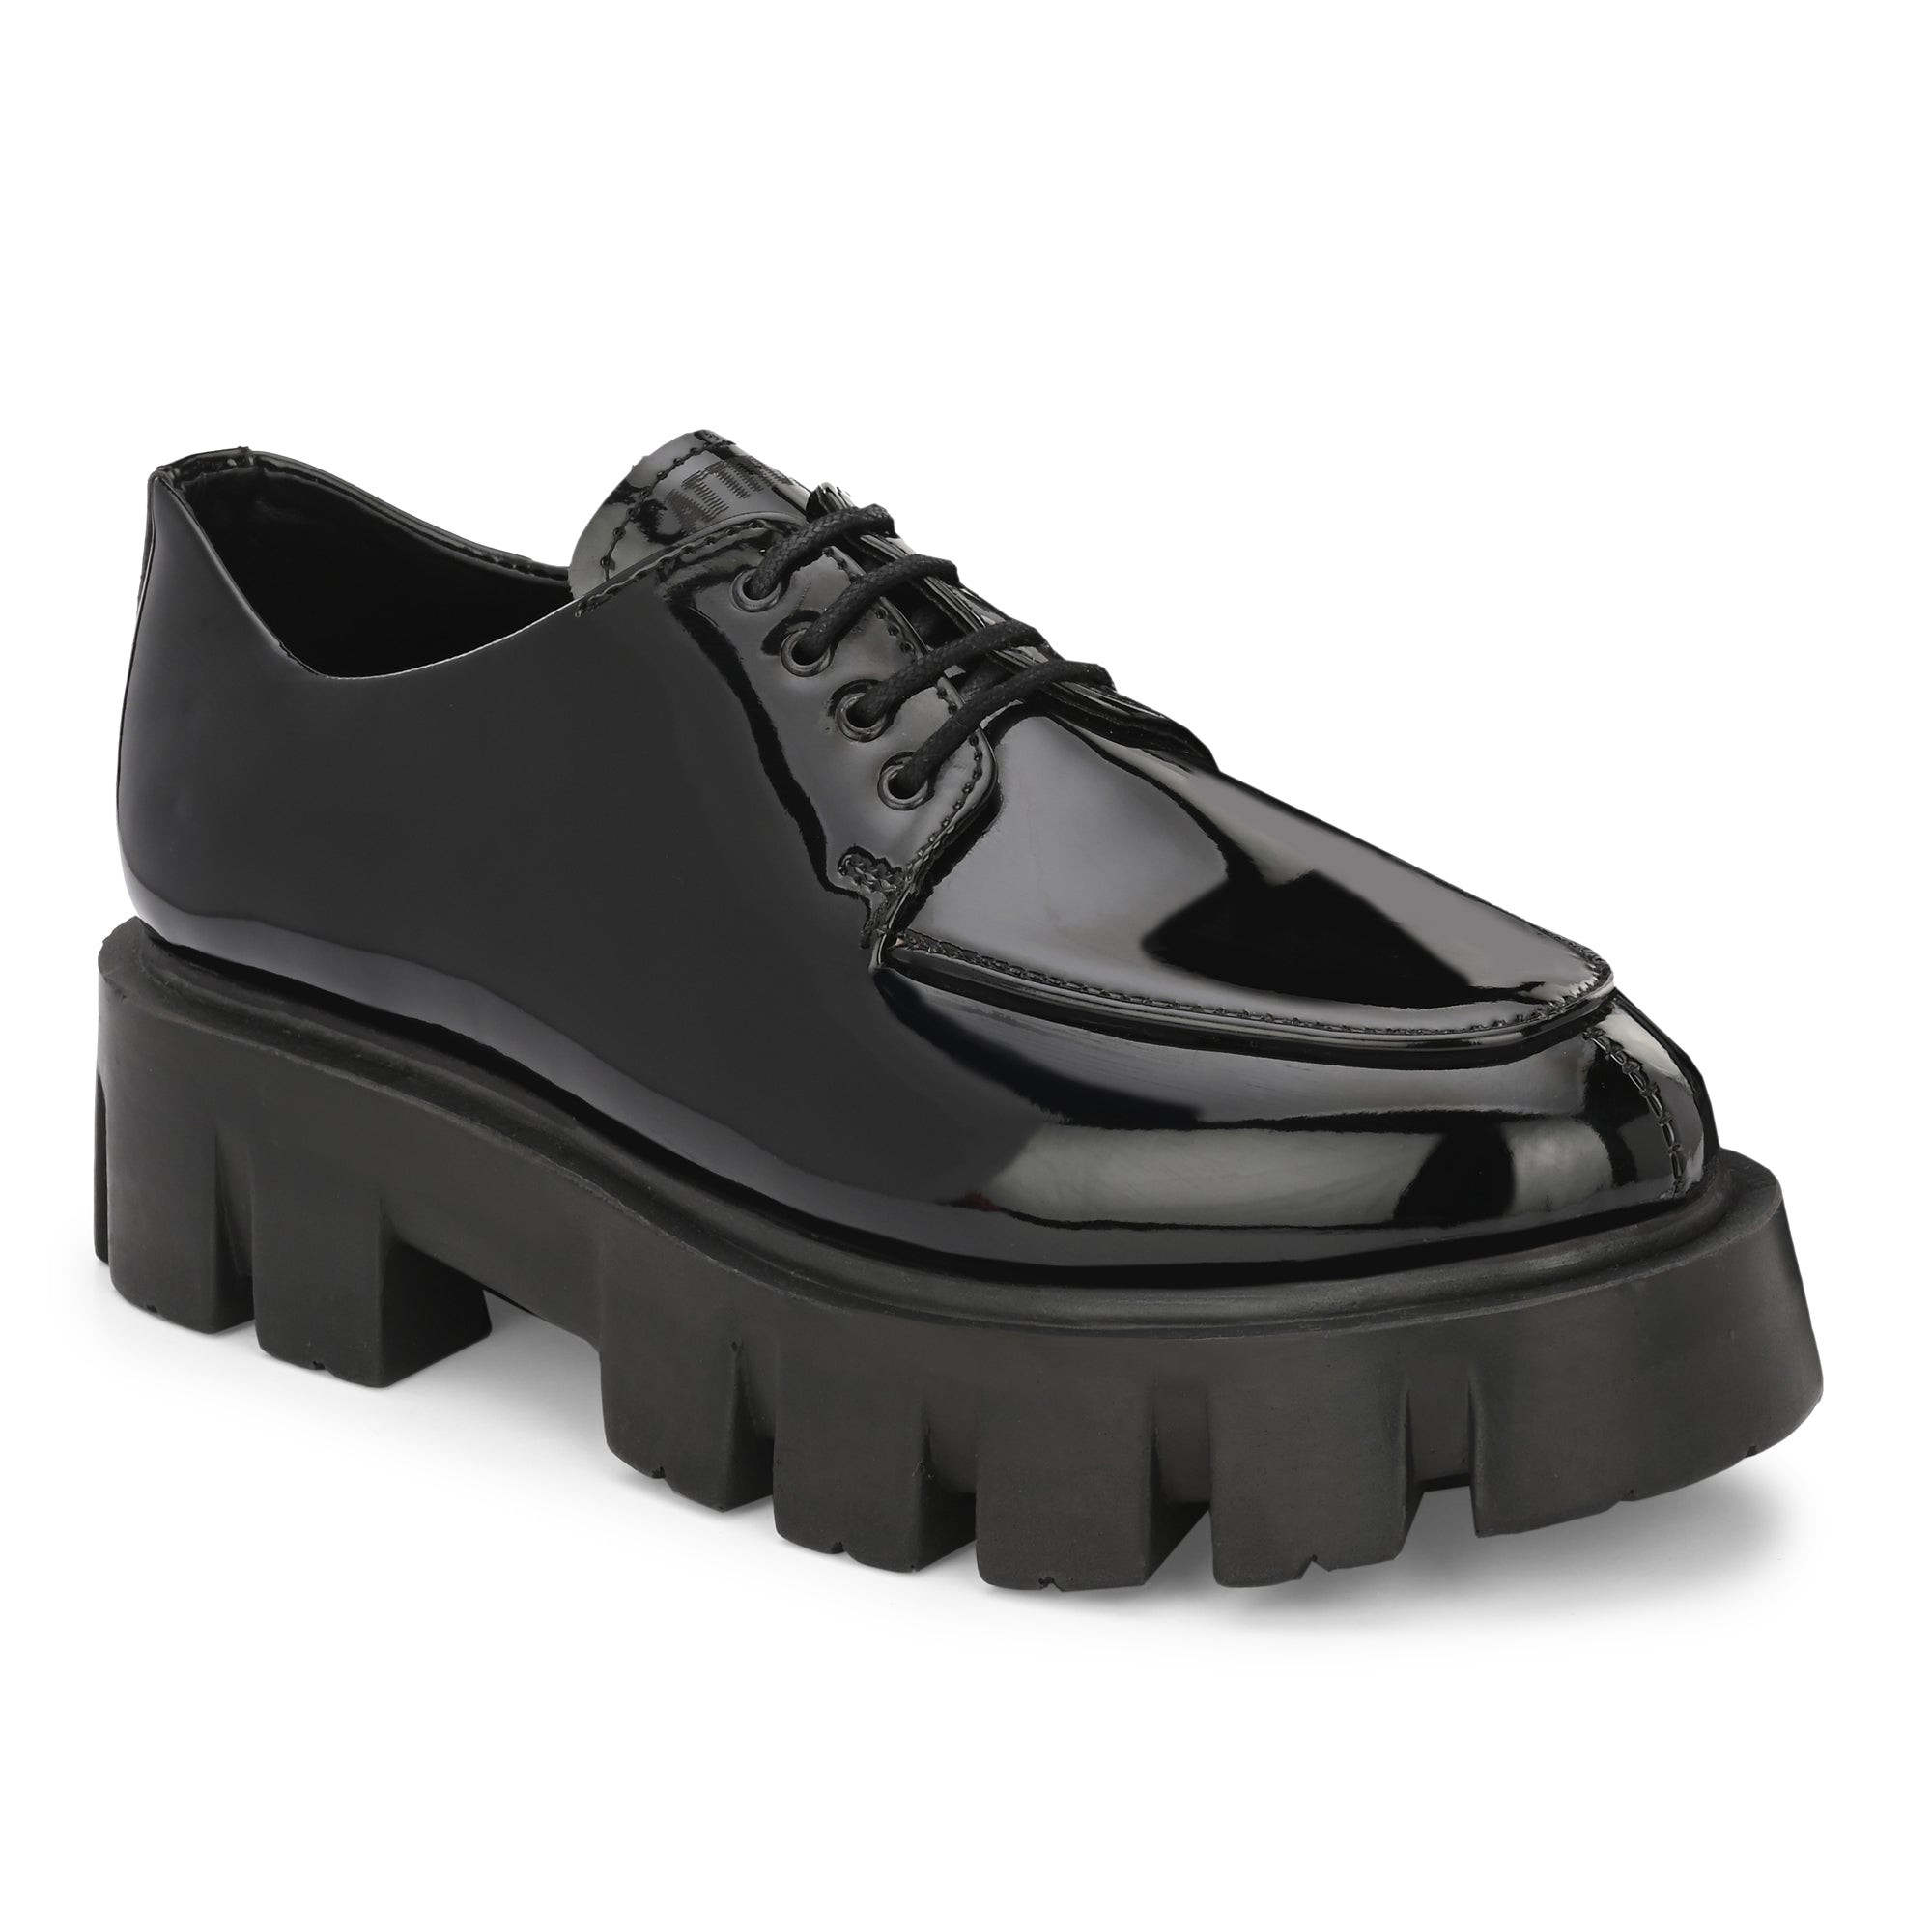 attitudist-glossy-black-high-heel-derby-shoes-for-men